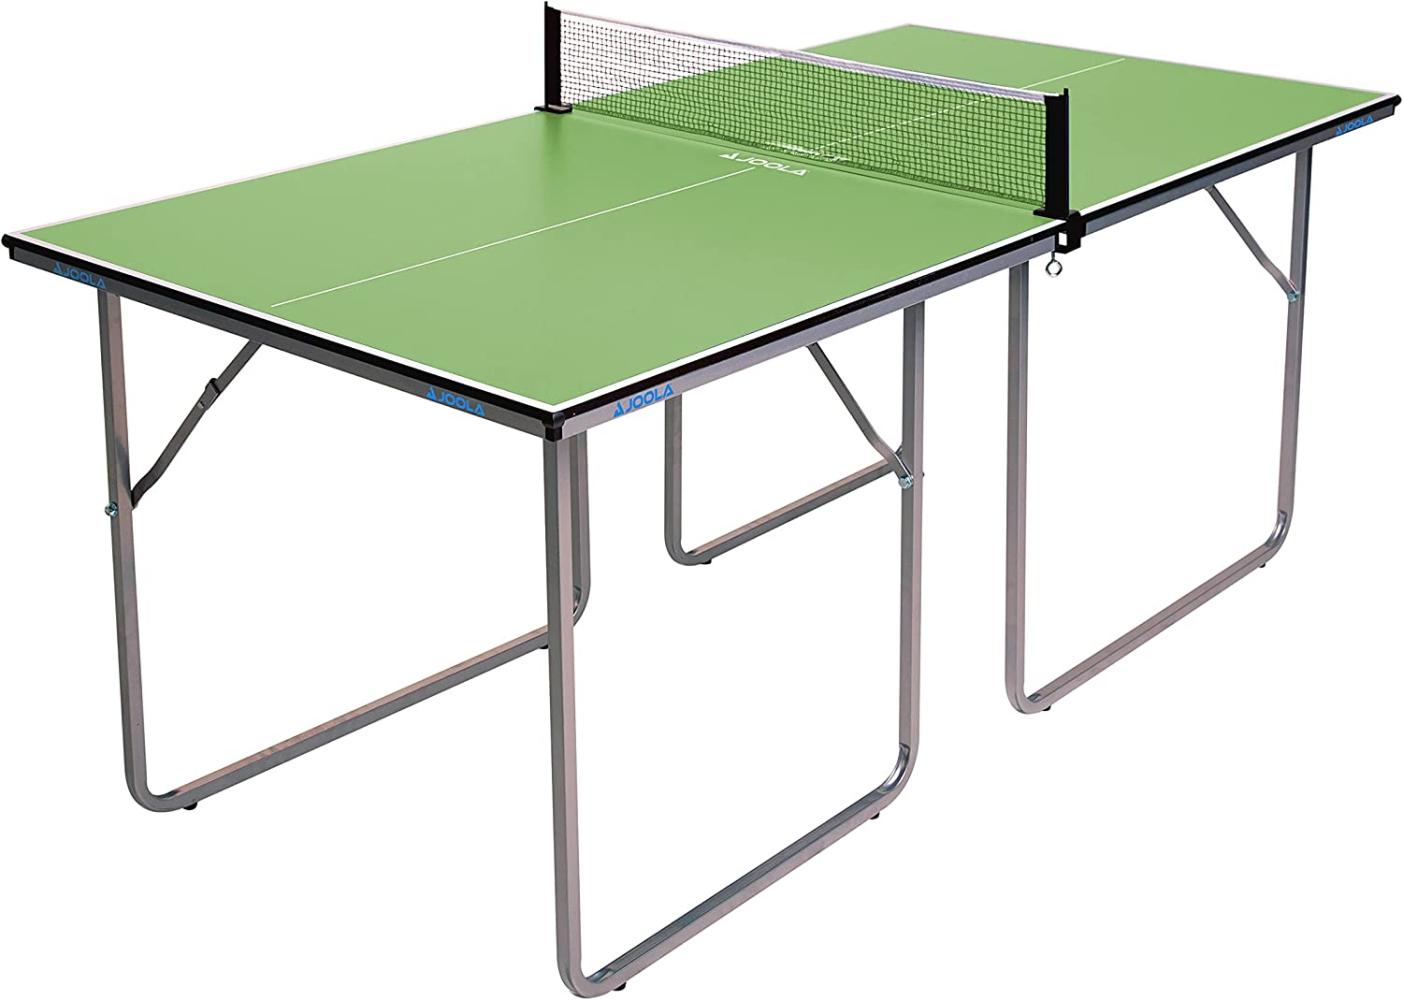 Joola 'Indoor-Tischtennisplatte Midsize', inkl. Netzgarnitur, 168 x 84 x 76 cm, grün Bild 1